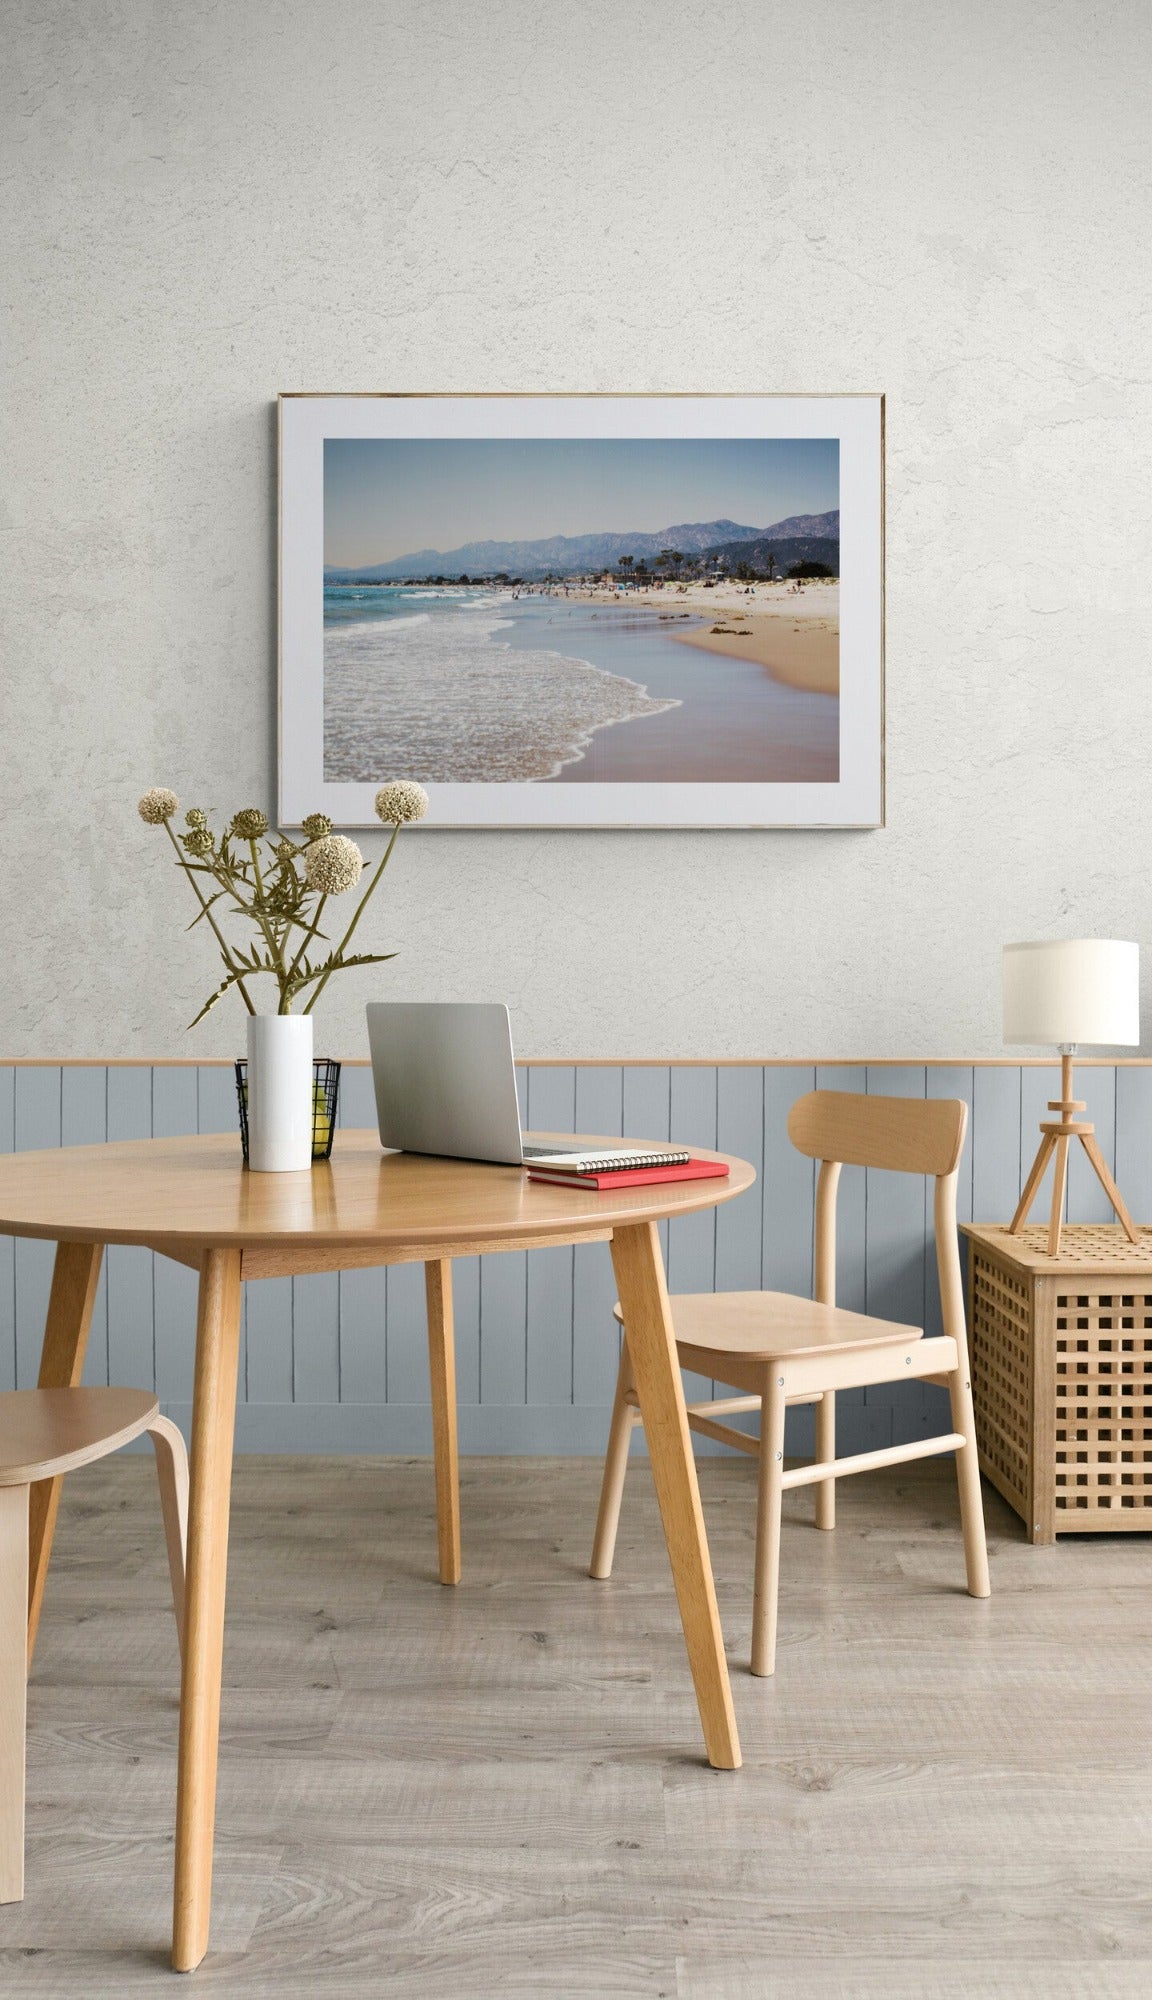 Carpinteria Beach Photograph in a dining room as wall art